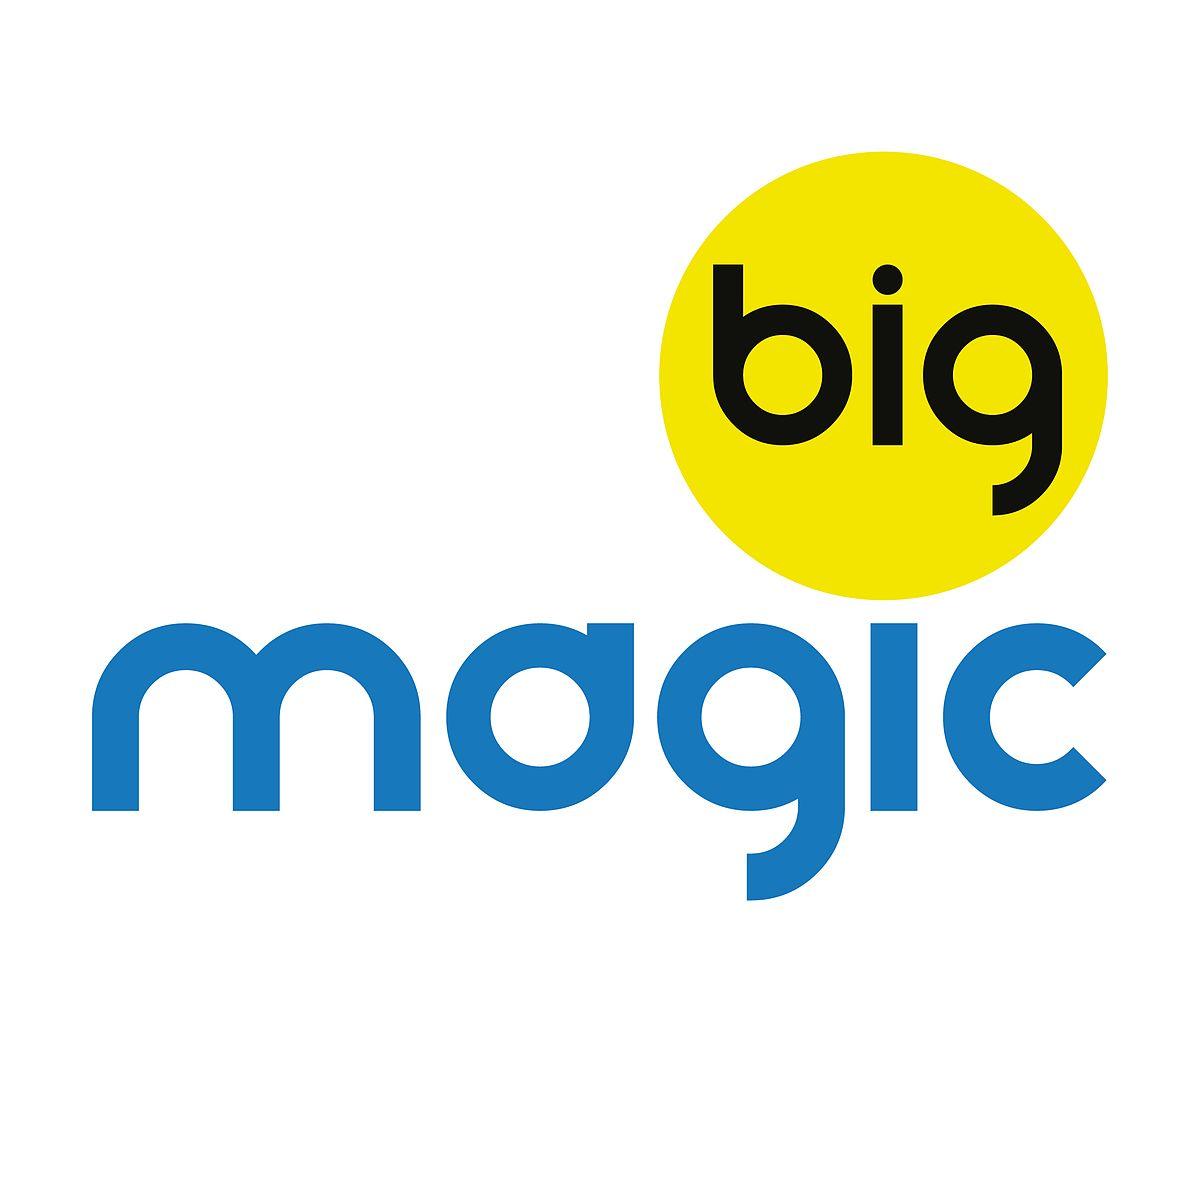 Magic Logo - Image - Big Magic Logo.jpg | Logopedia | FANDOM powered by Wikia